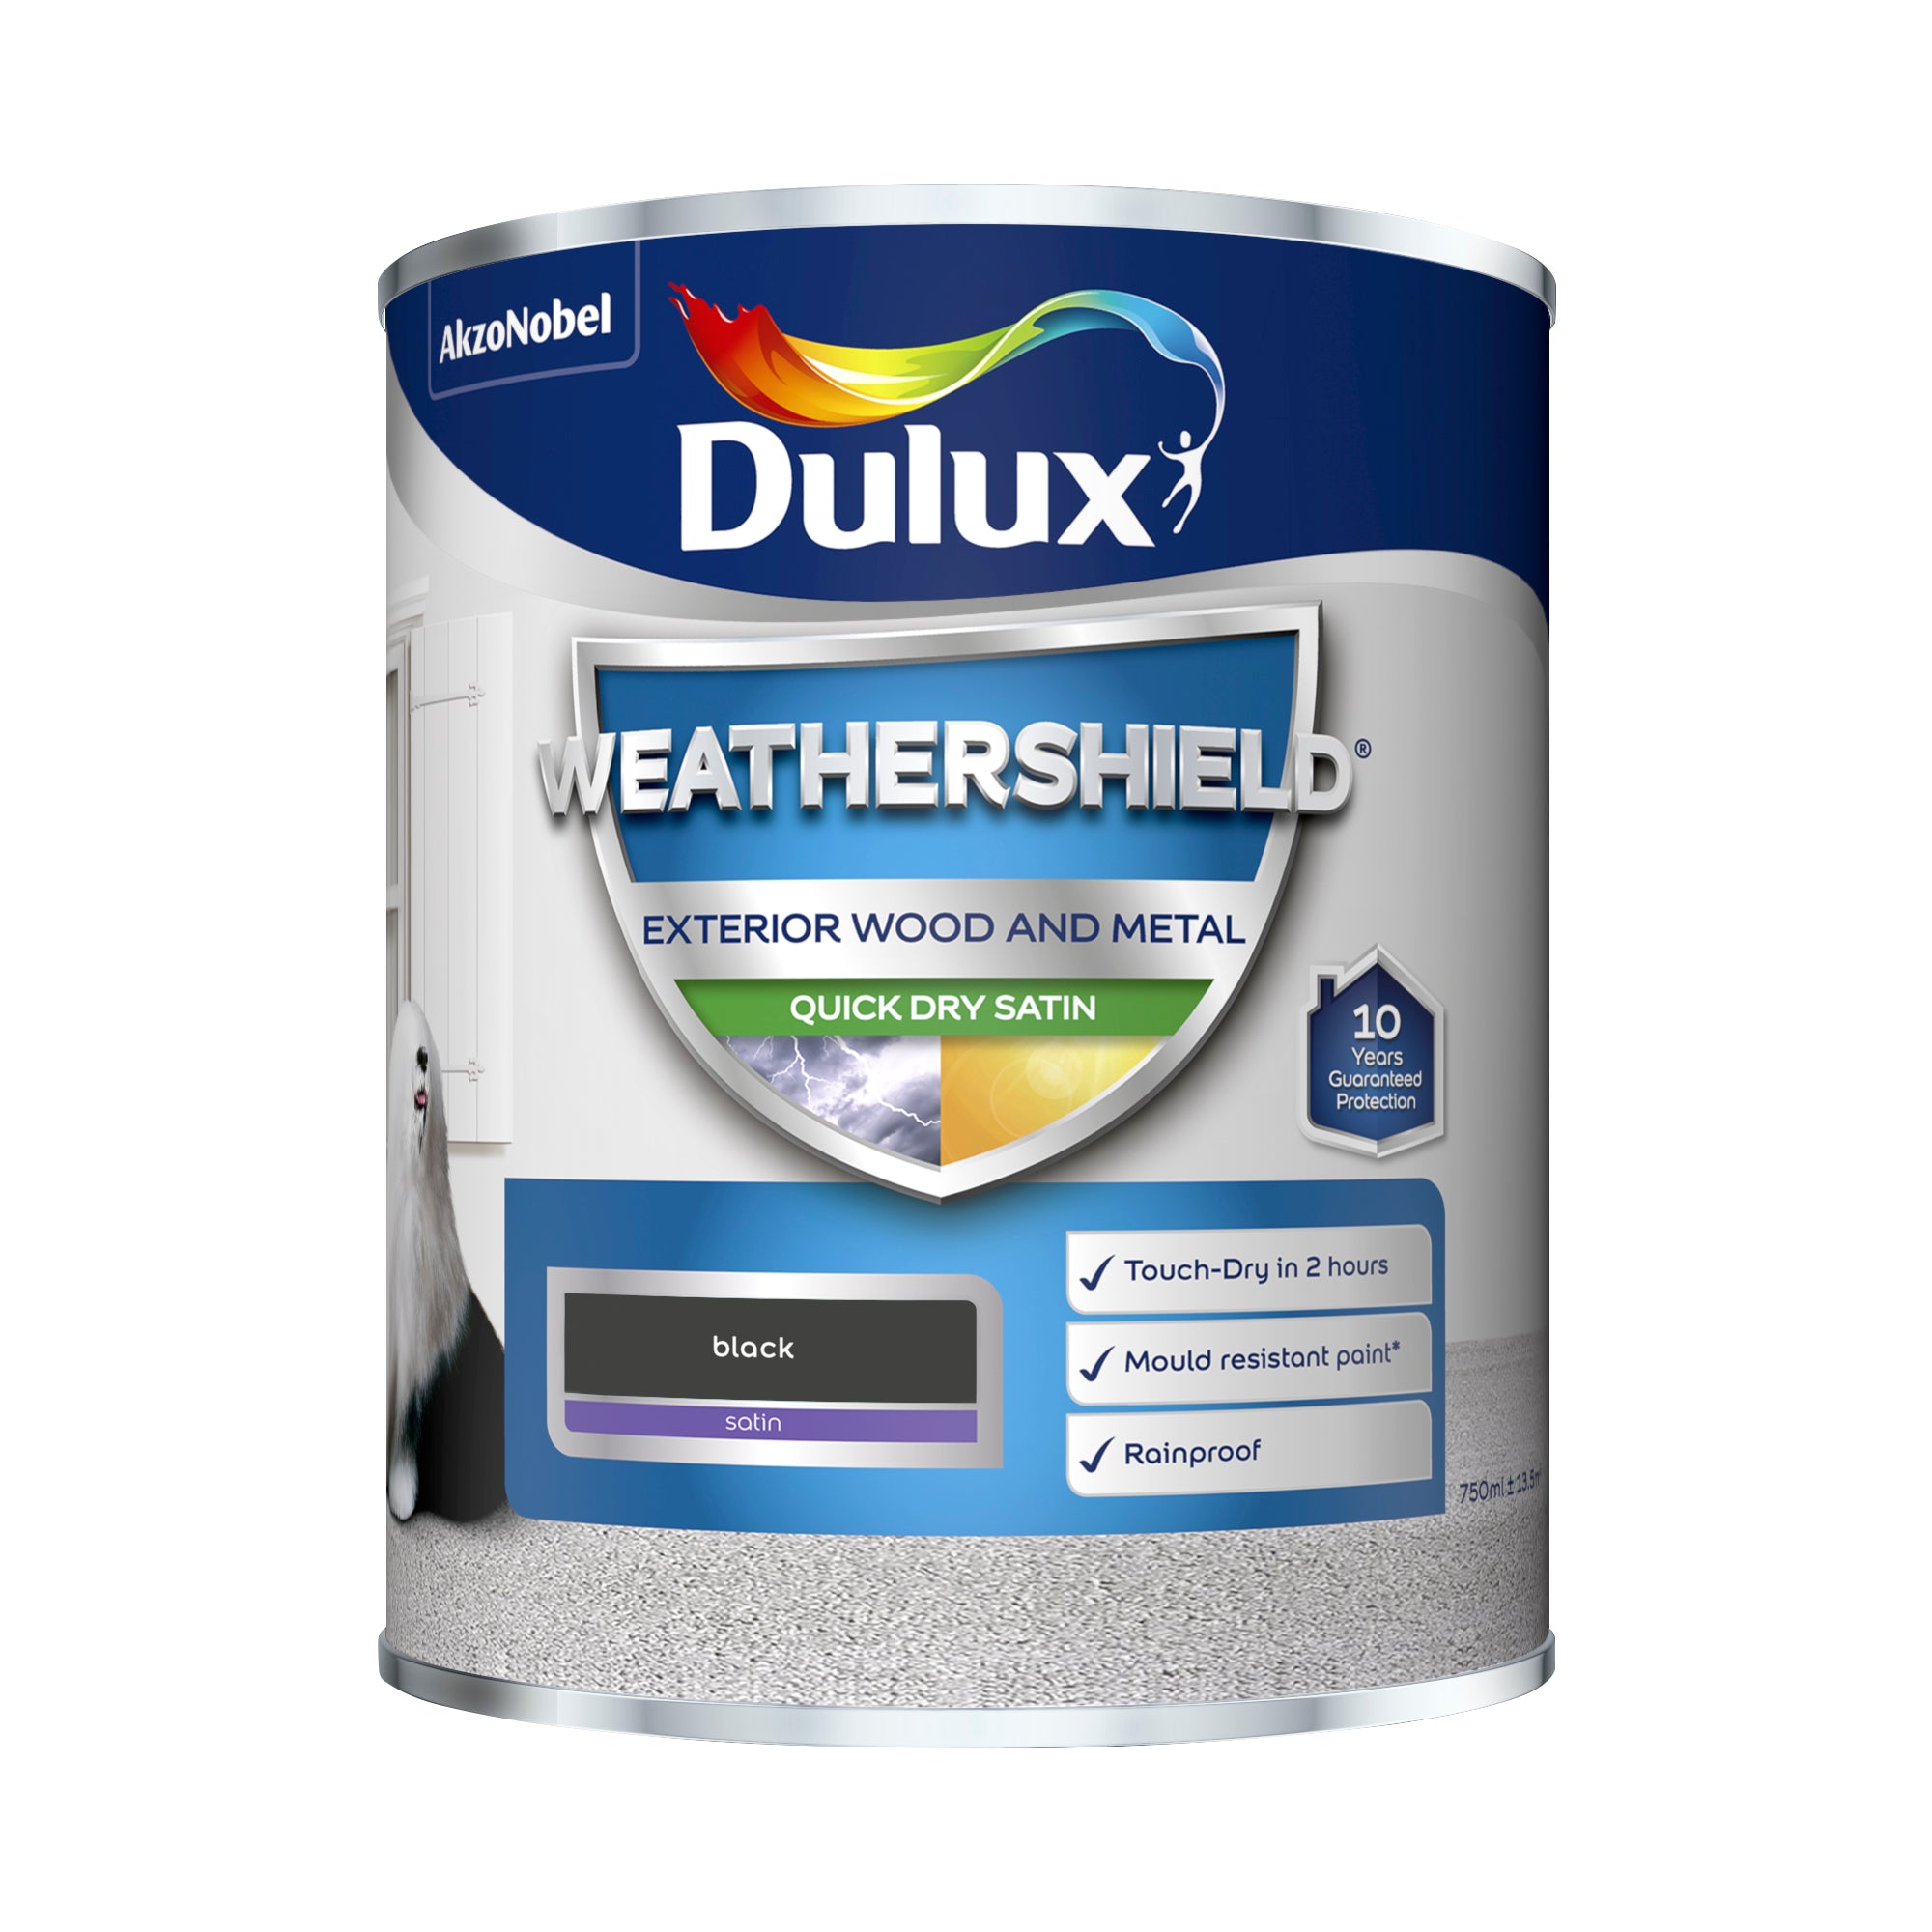 Dulux Weathershield Quick Dry Satin Black 750ml